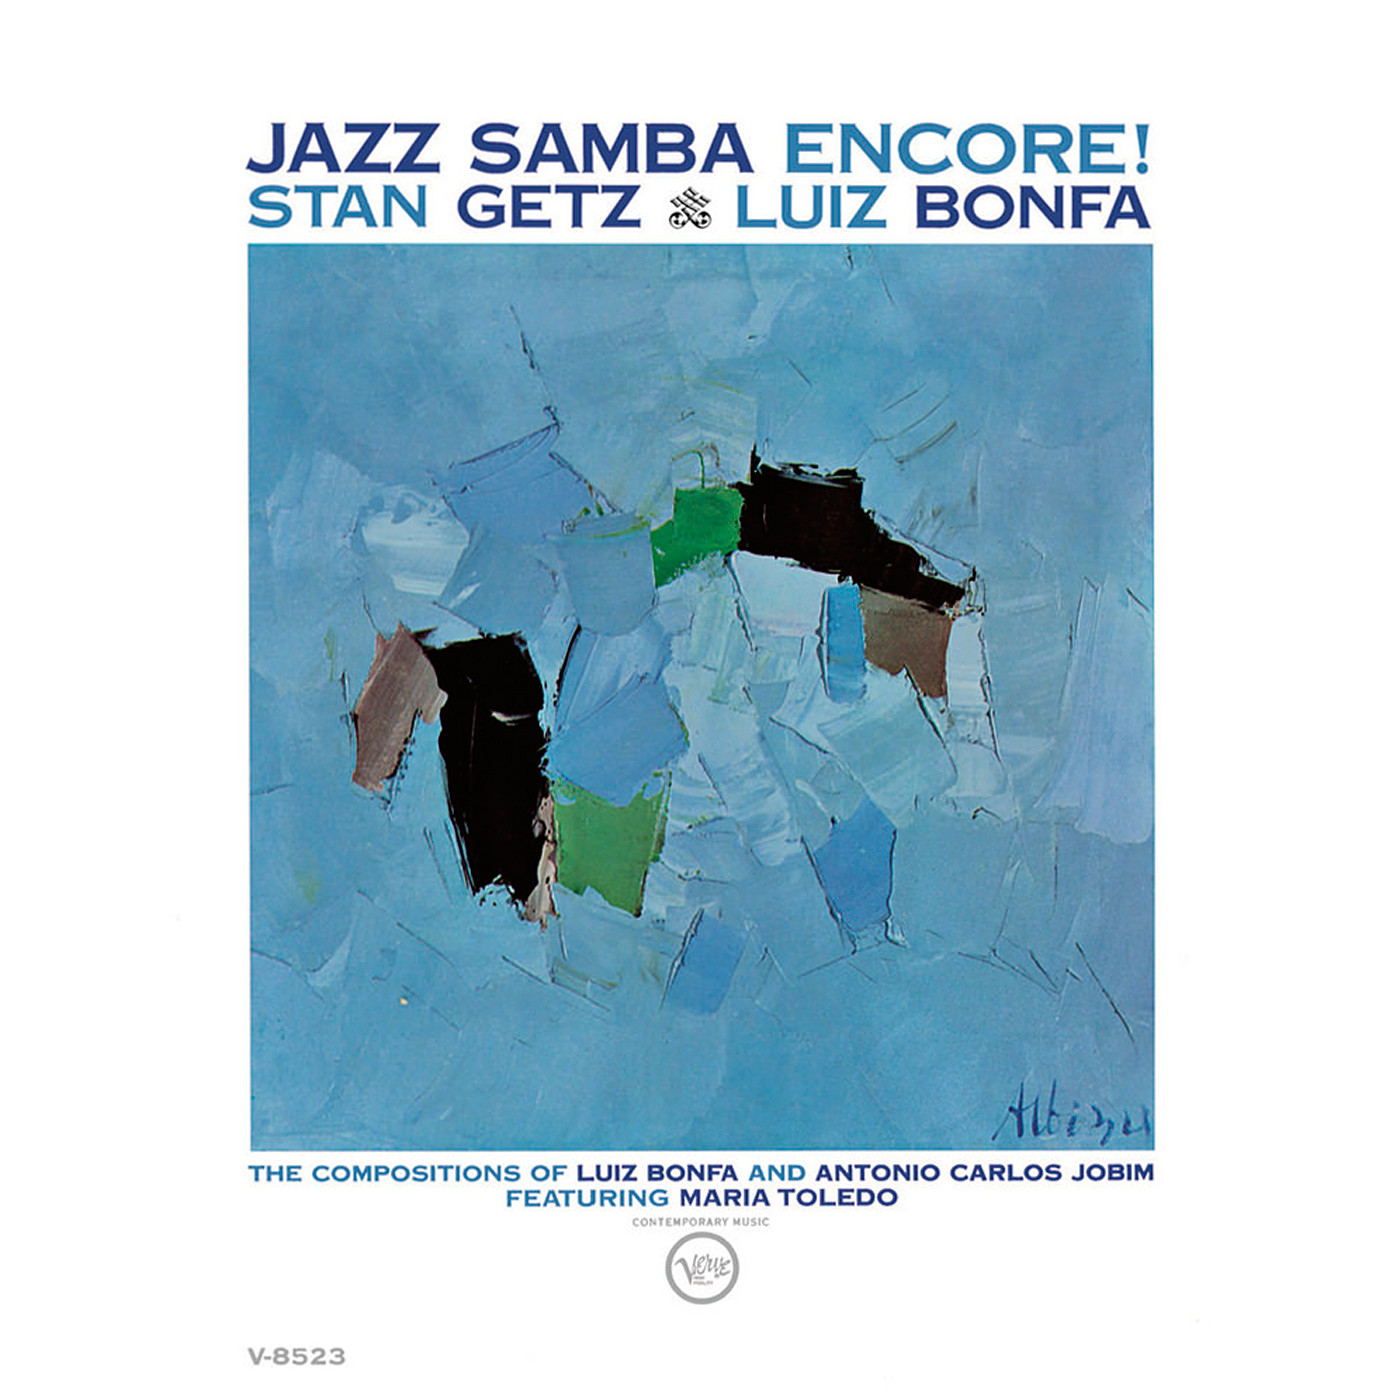 Stan Getz & Luiz Bonfa - Jazz Samba Encore! (1963/2014) [AcousticSounds FLAC 24bit/192kHz]